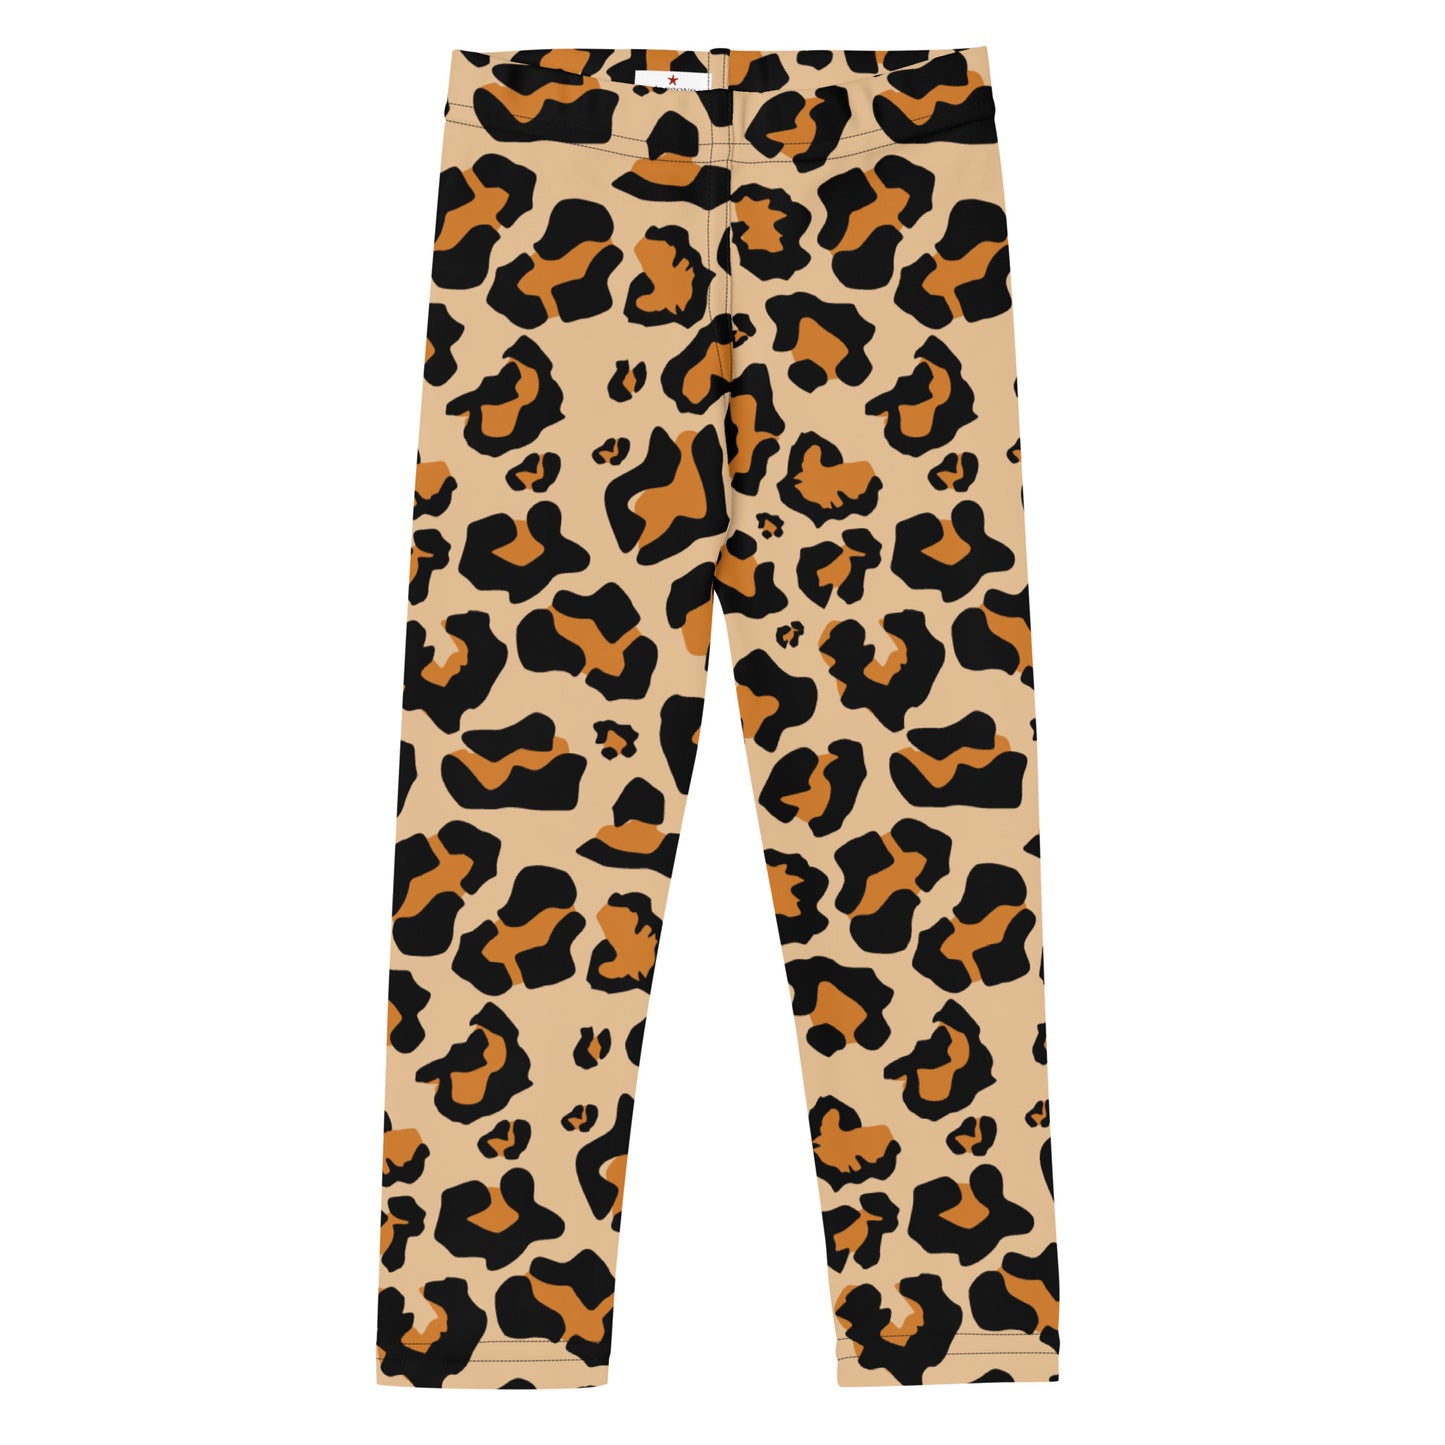 Leopard Kids Girls Leggings (2T-7), Cheetah Animal Print Toddler Children Cute Printed Yoga Pants Graphic Fun Tights Gift Starcove Fashion